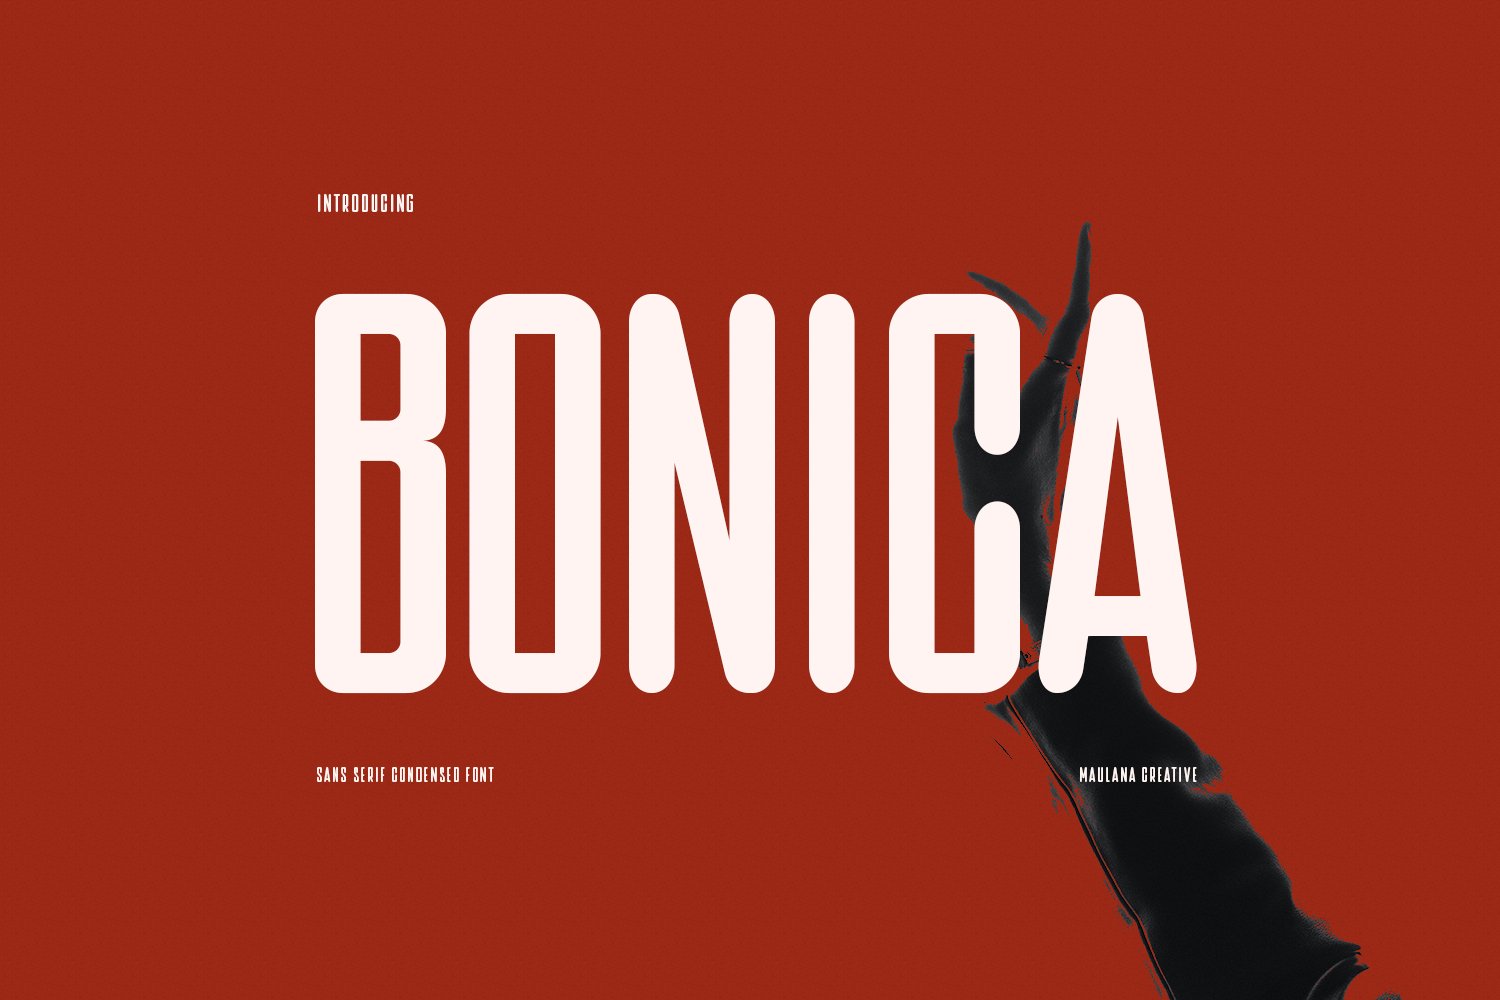 Bonica Sans Serif Soft Condensed Fon cover image.